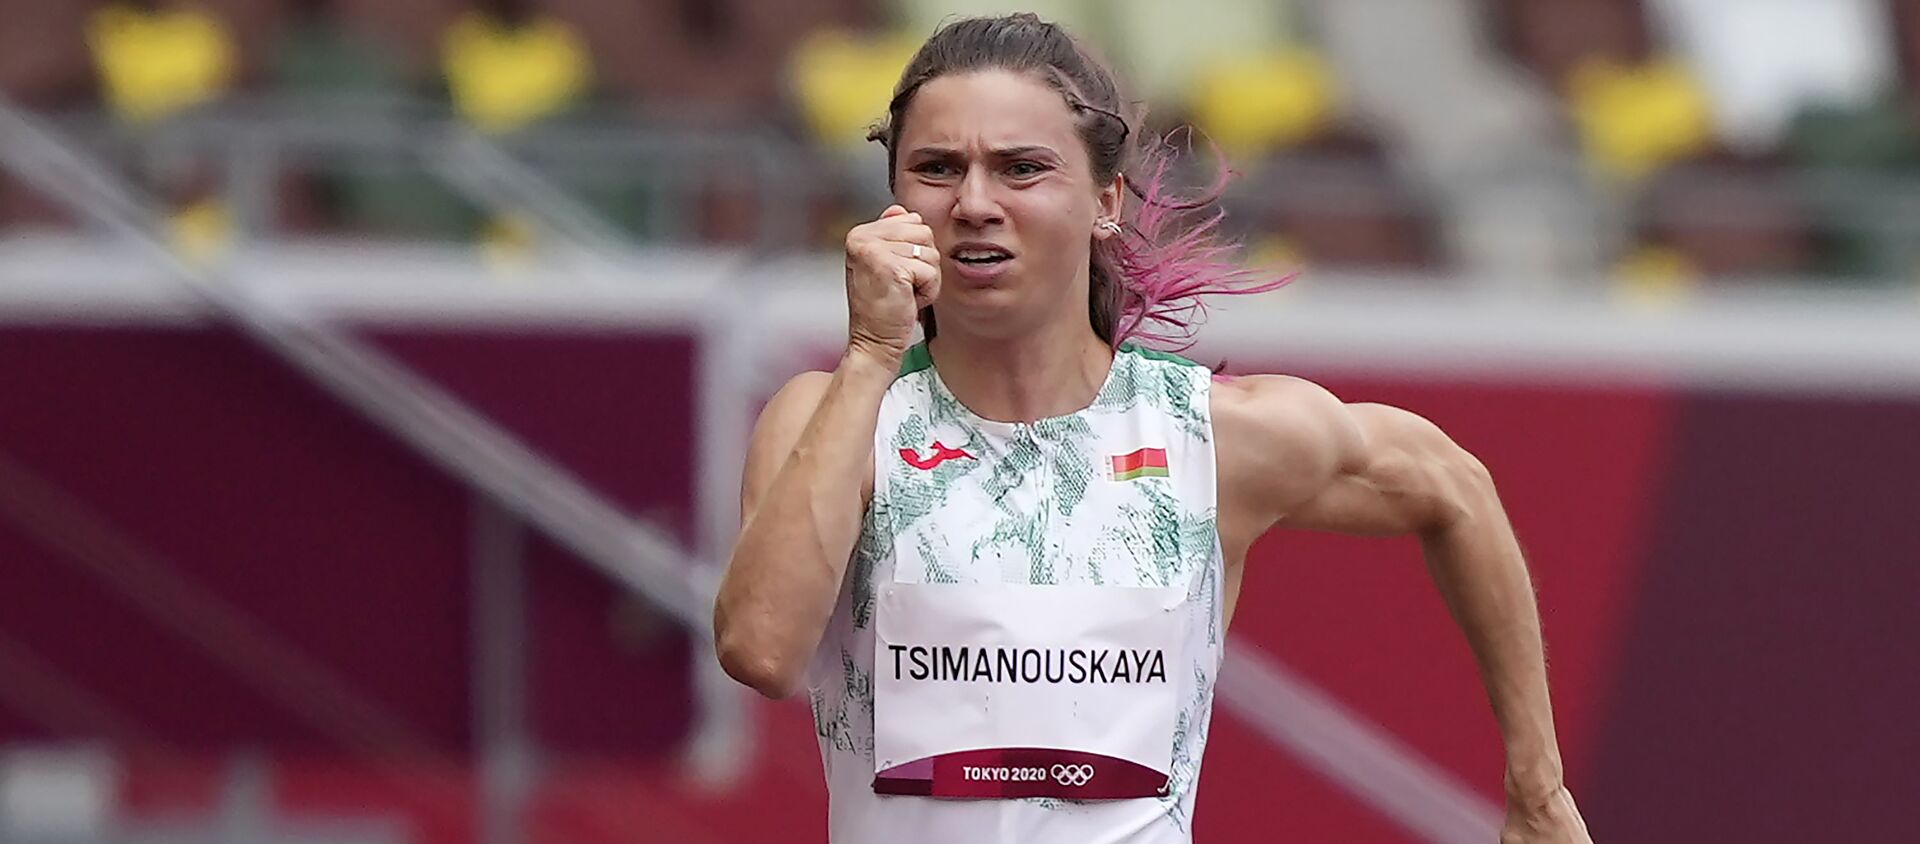 Kristina Timanovskaya, of Belarus, runs in the women's 100-meter run at the 2020 Summer Olympics, Friday, July 30, 2021.  - Sputnik International, 1920, 02.08.2021